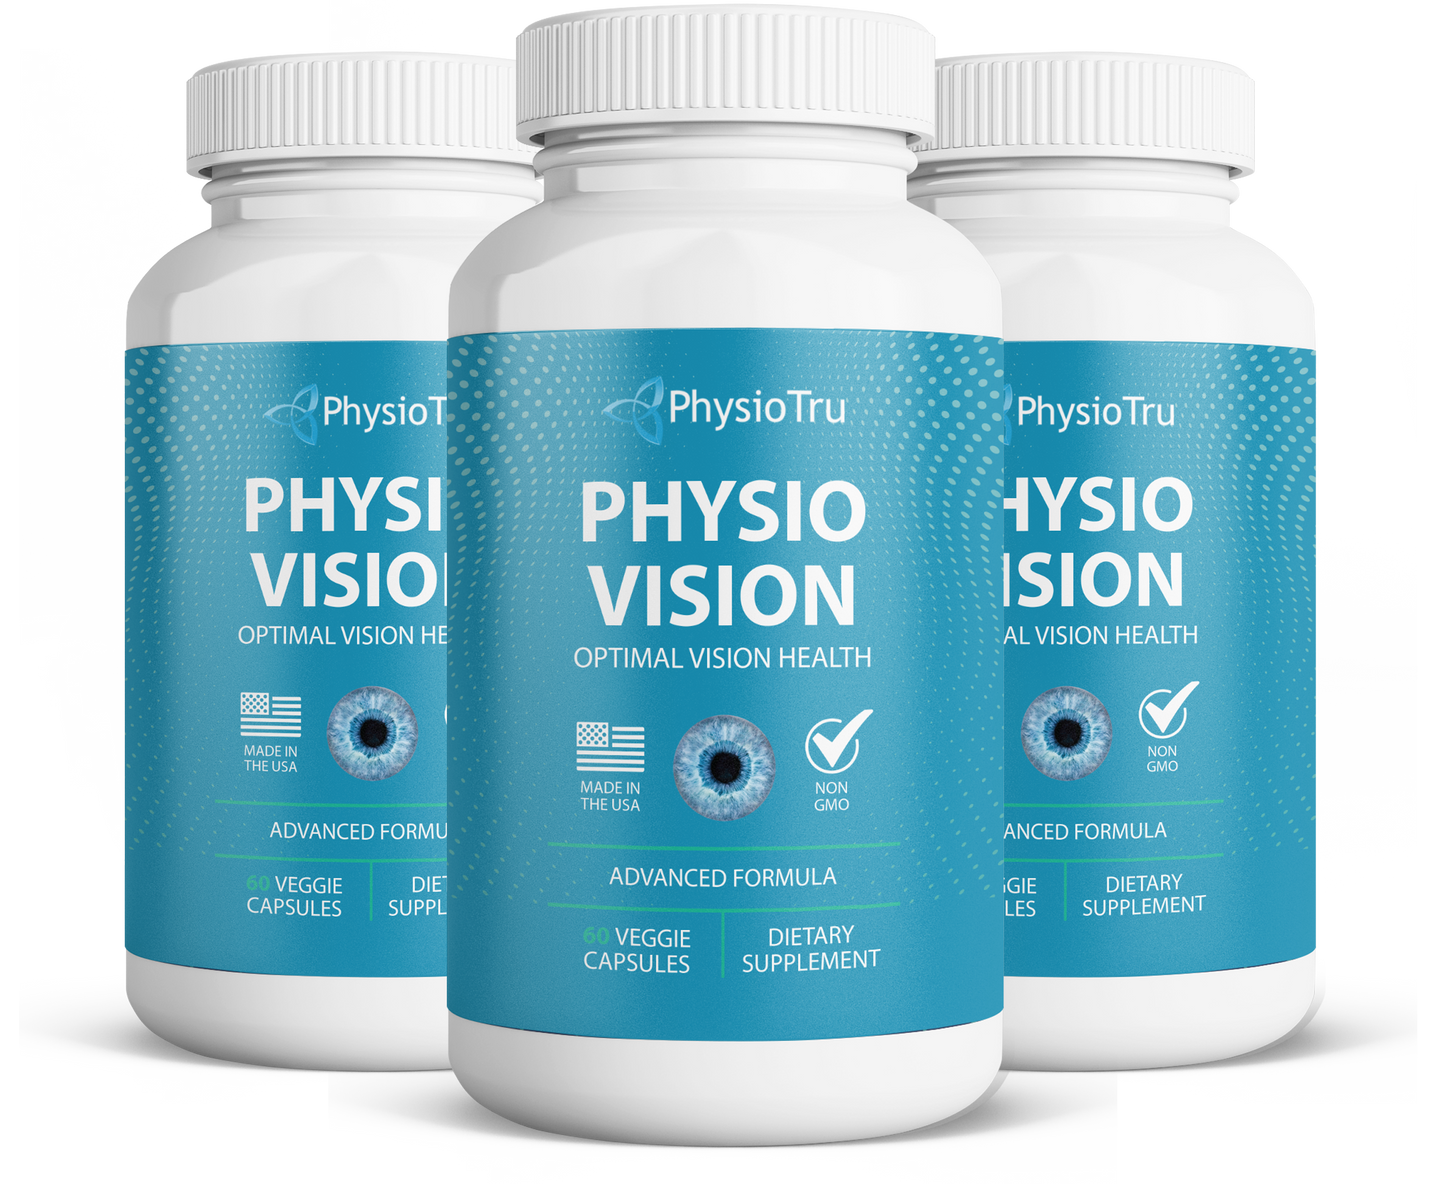 Physio Vision